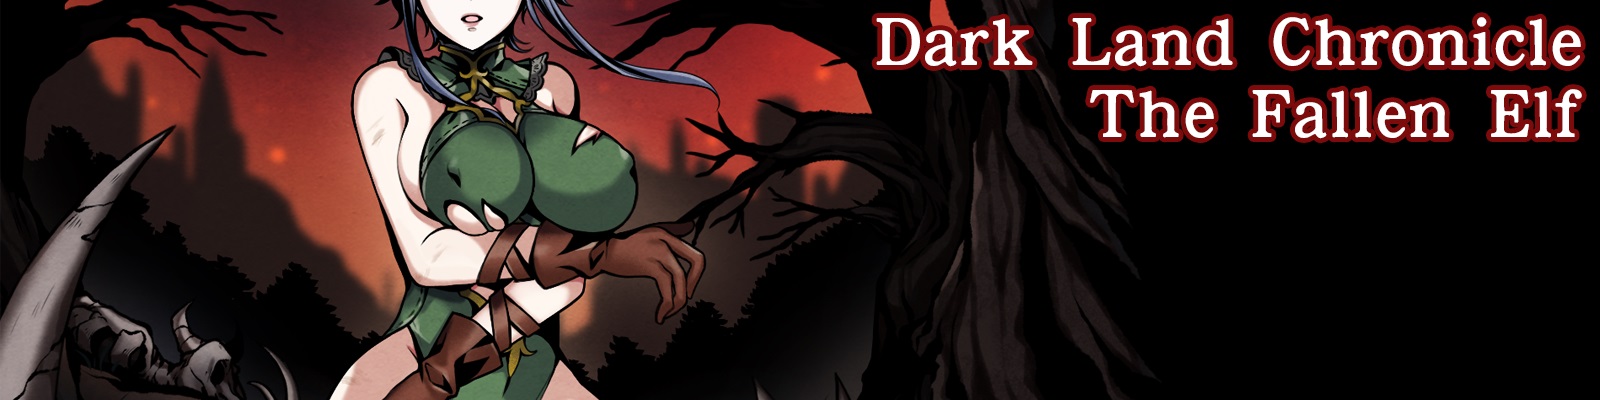 Dark Land Chronicle: The Fallen Elf poster